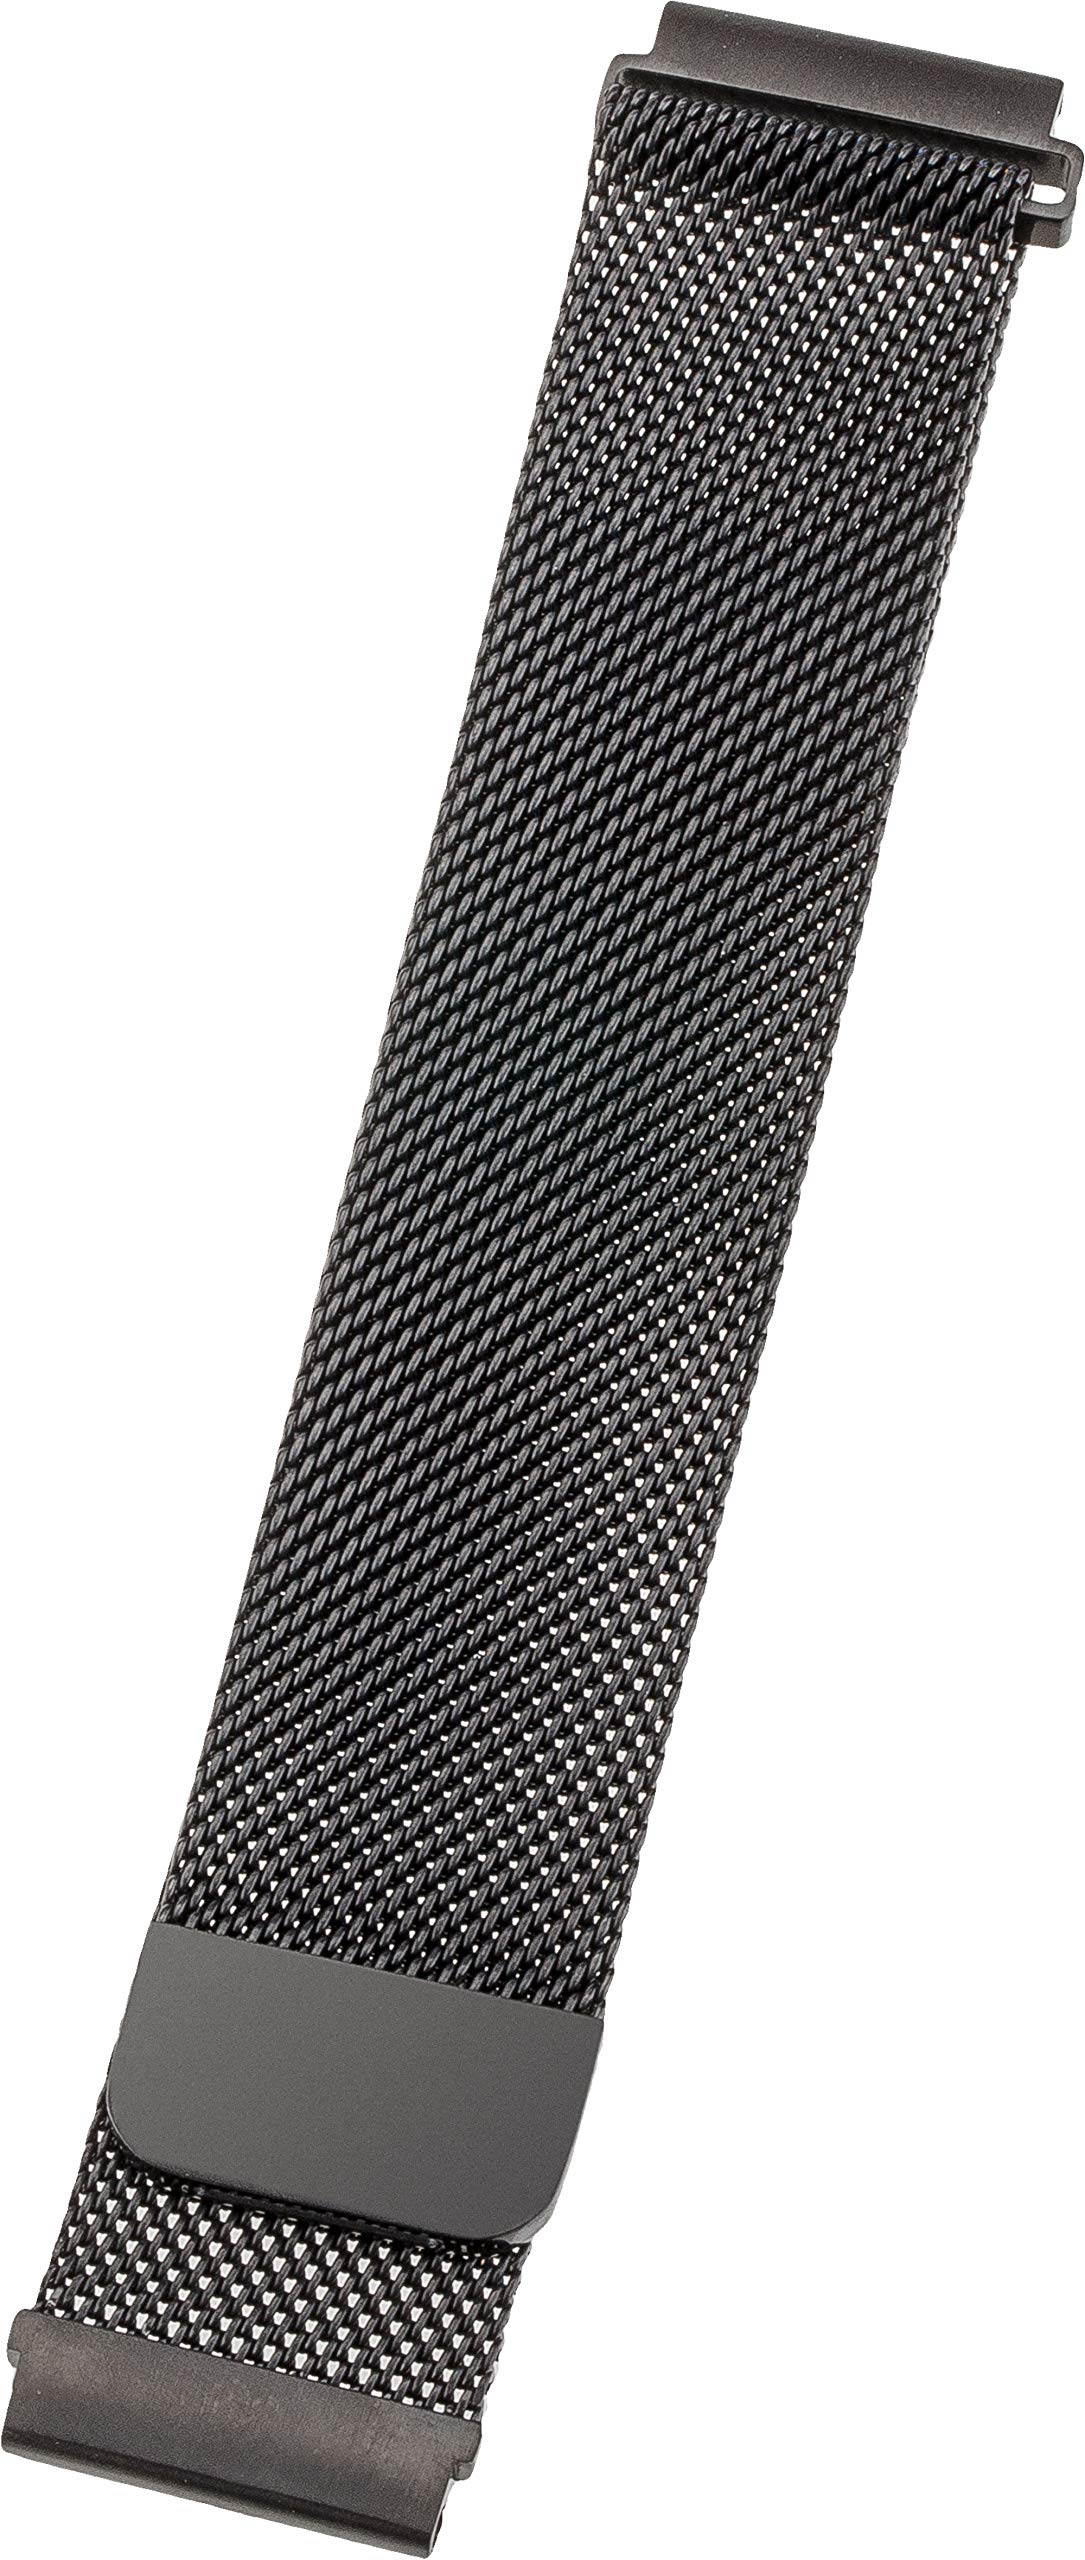 Peter Jäckel Armband 20mm Milanaise Black 17659, Schwarz